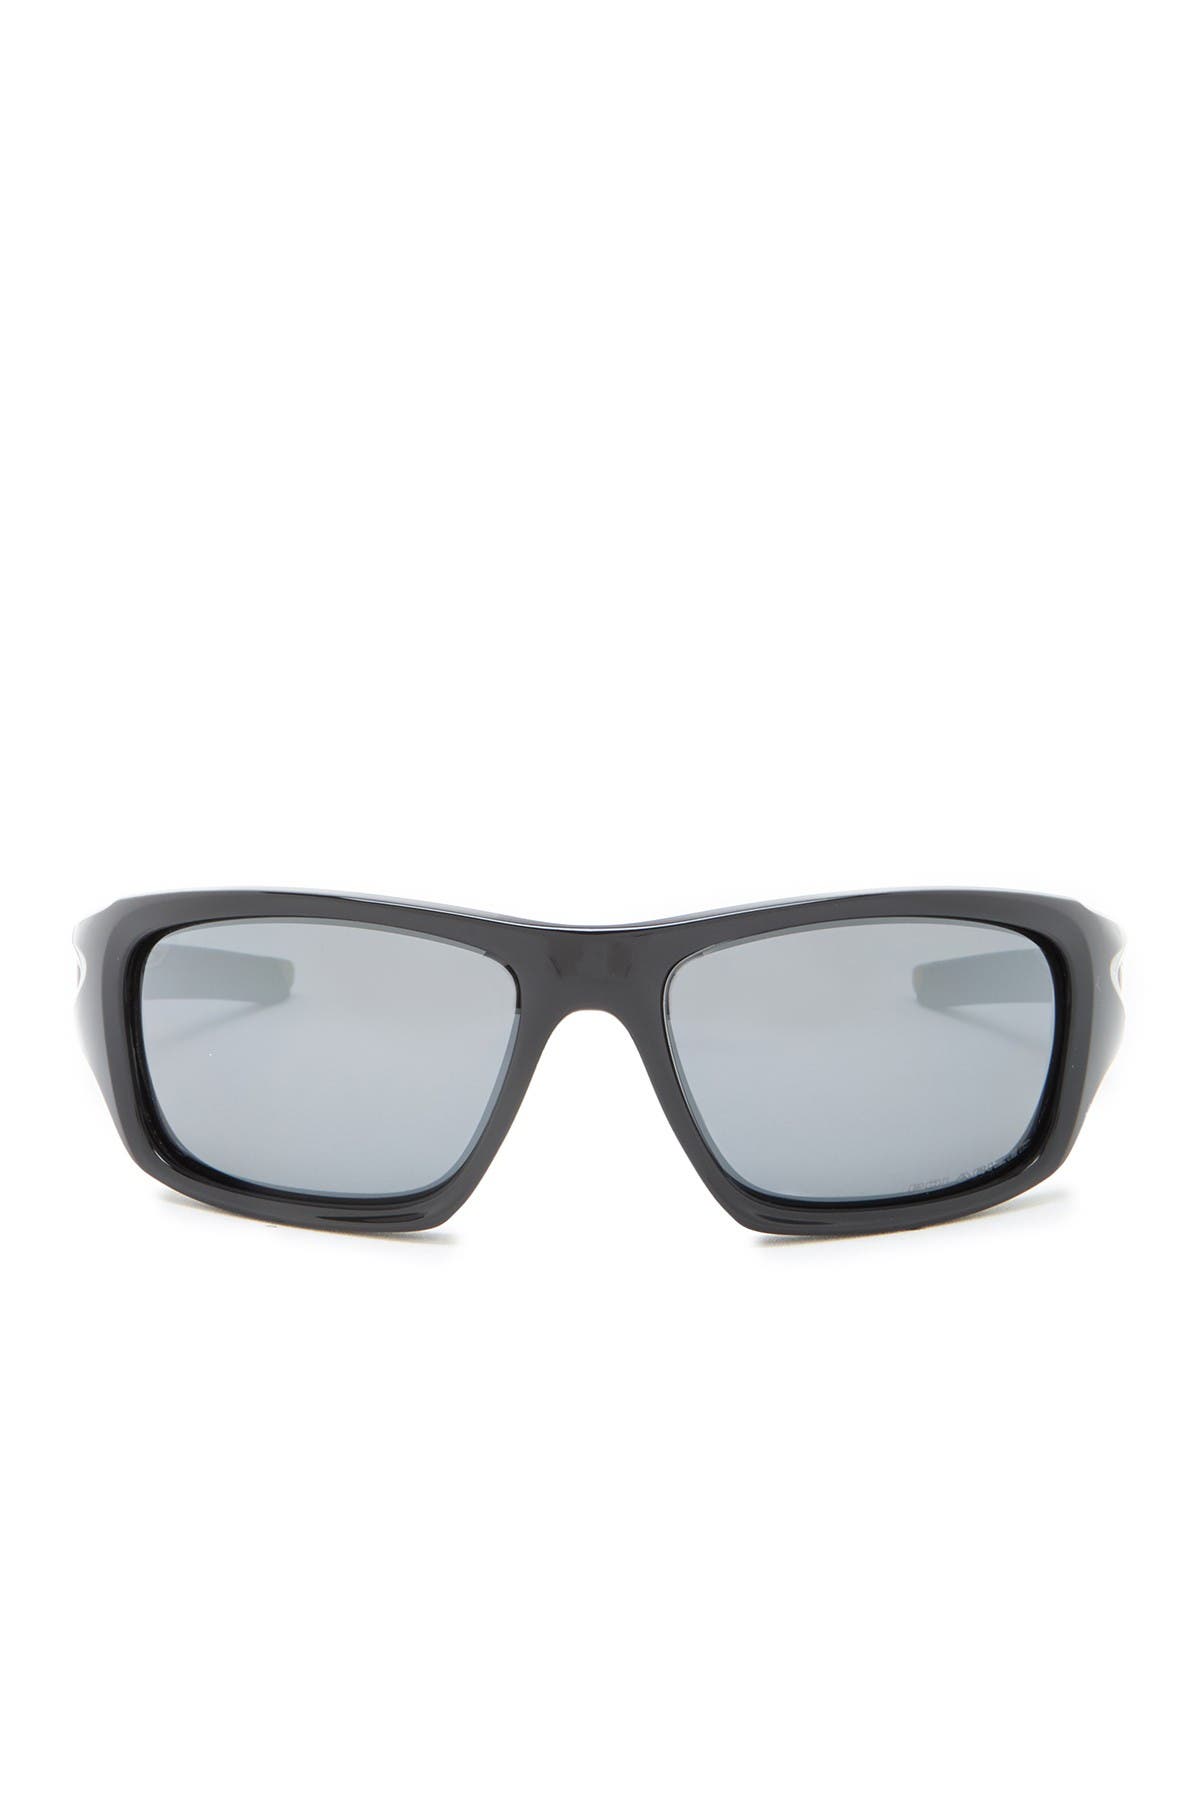 oakley valve polarized 60mm wrap sunglasses